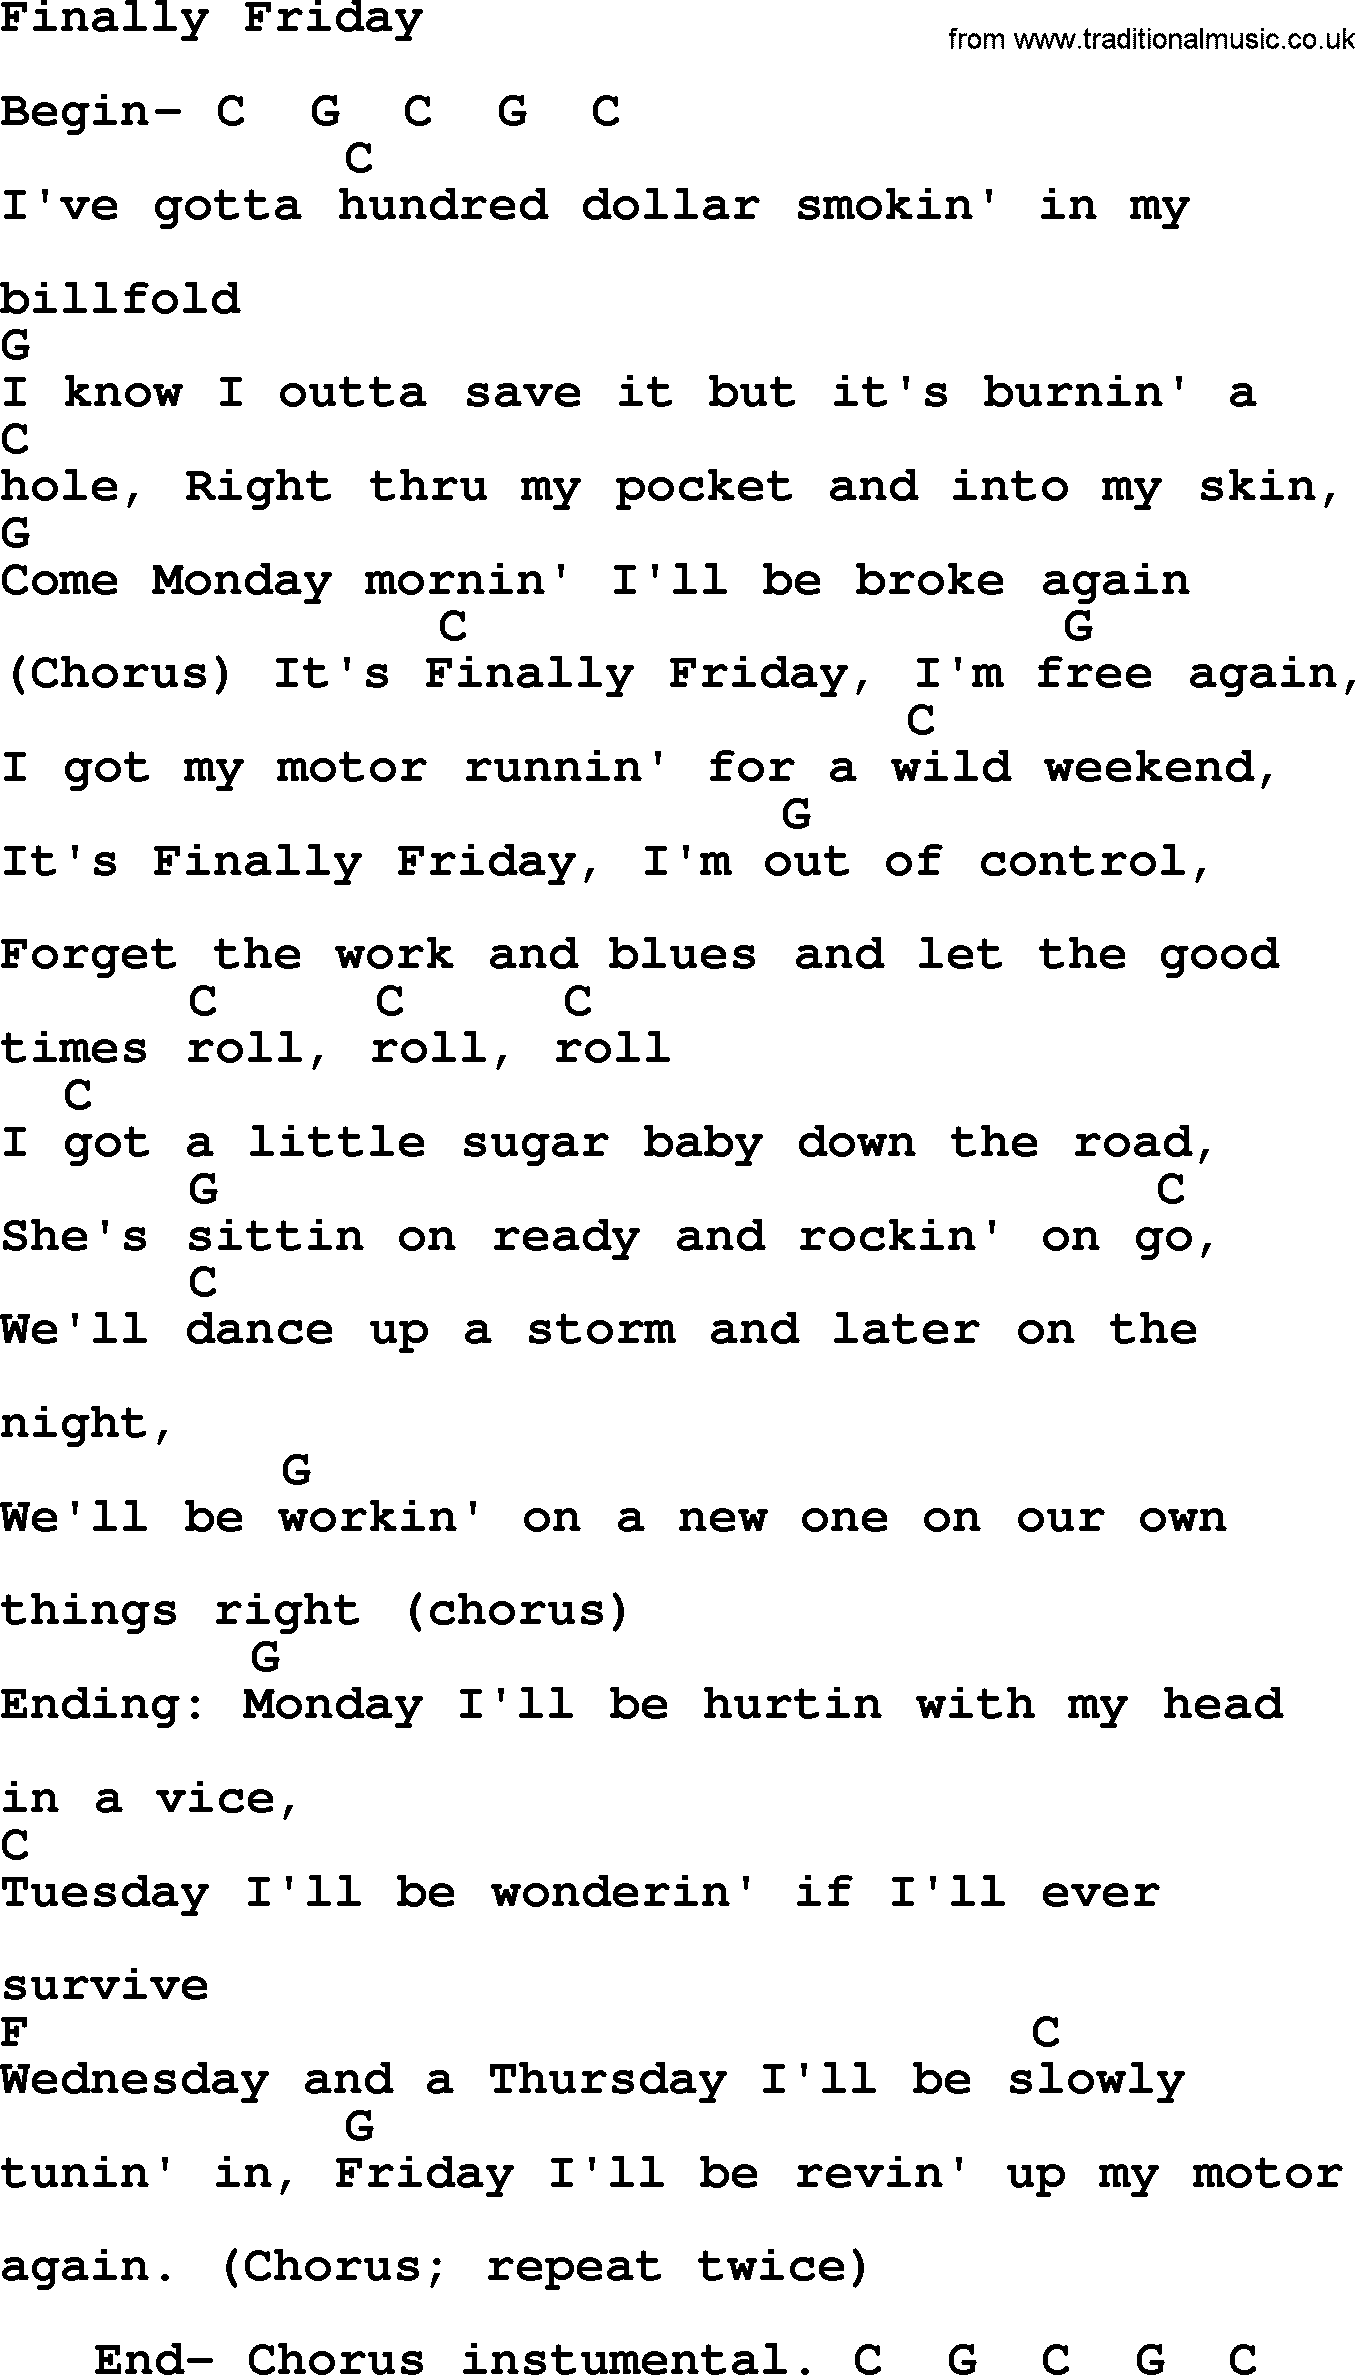 George Jones song: Finally Friday, lyrics and chords